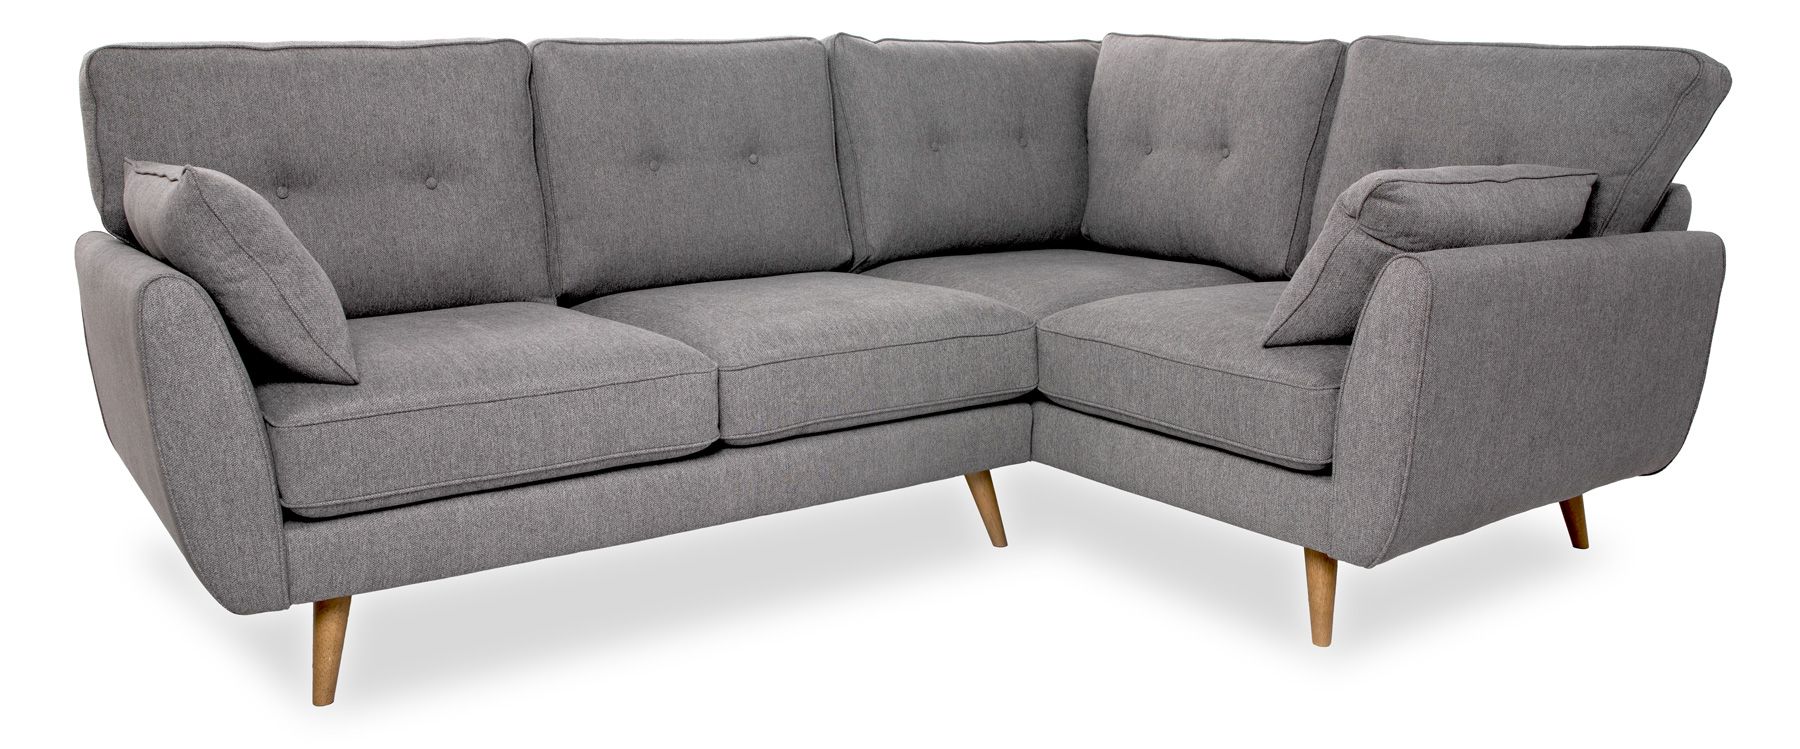 Anderson Grey Fabric 2 5l 1 5r Corner Sofa